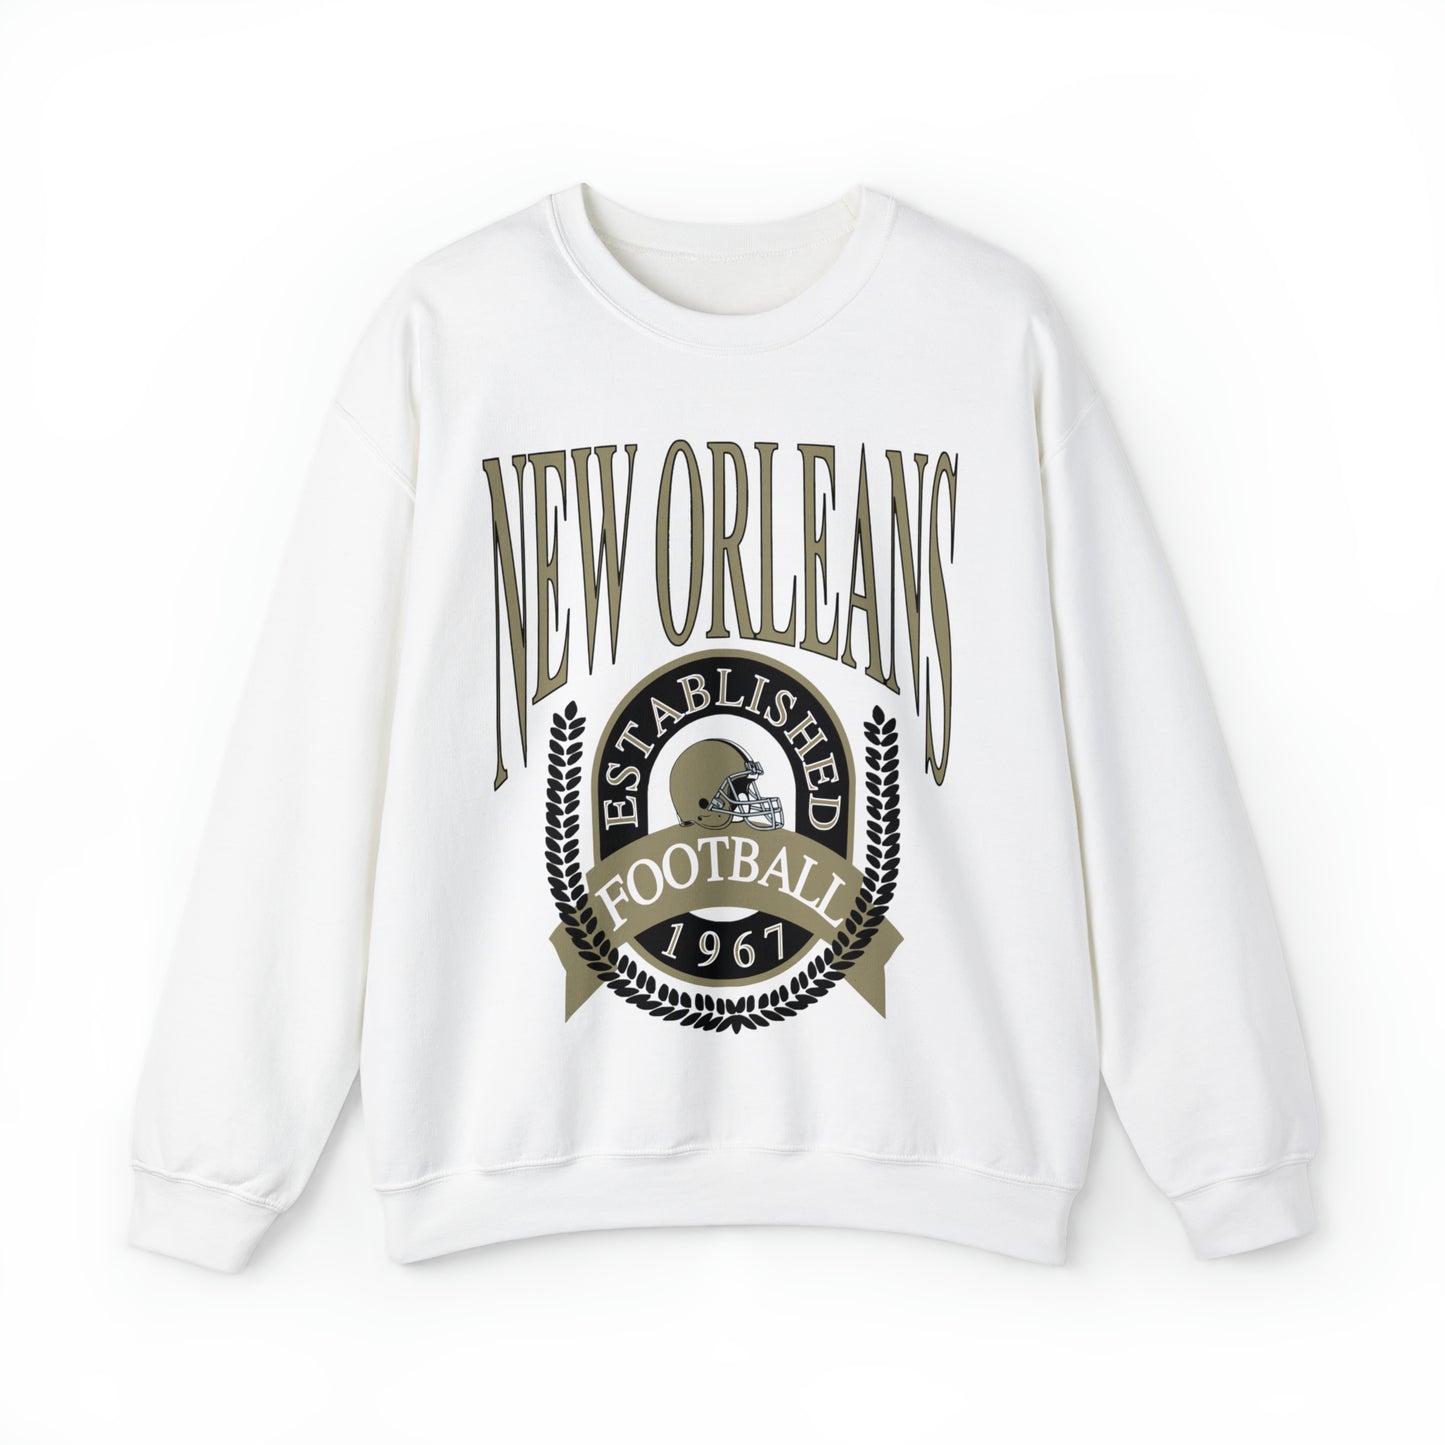 Throwback New Orleans Saints Crewneck - Vintage Style Louisiana Football Sweatshirt - Men's, Women's - Design 1